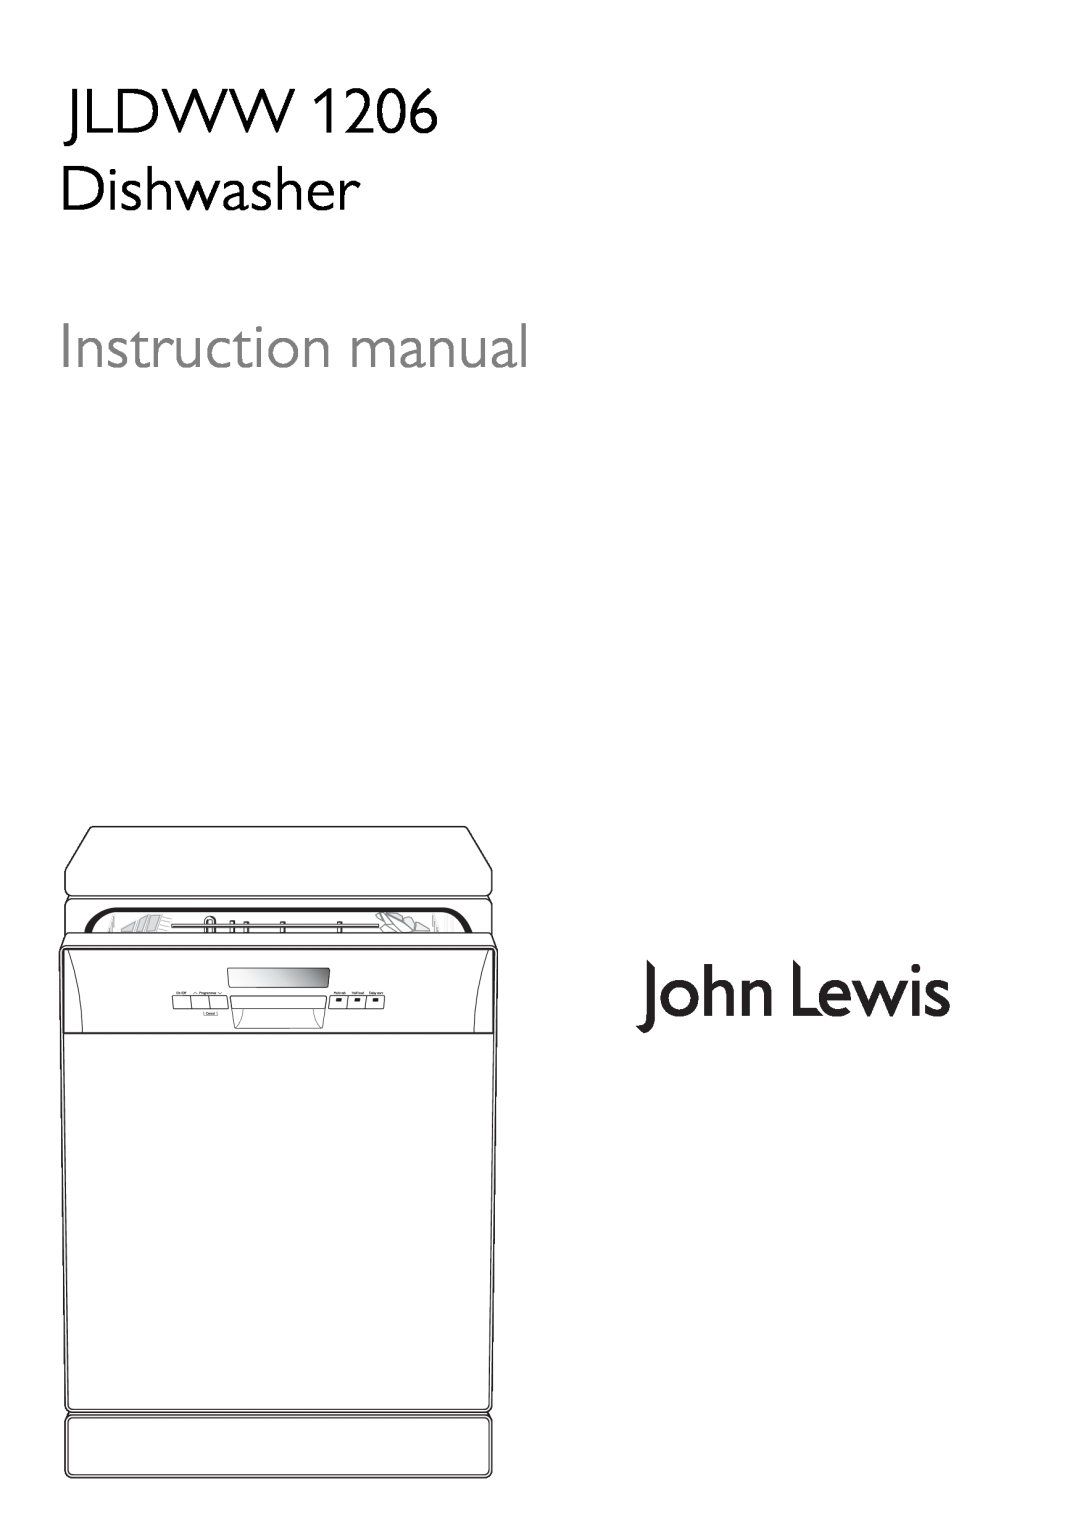 John Lewis instruction manual Instruction manual, JLDWW 1206 Dishwasher 